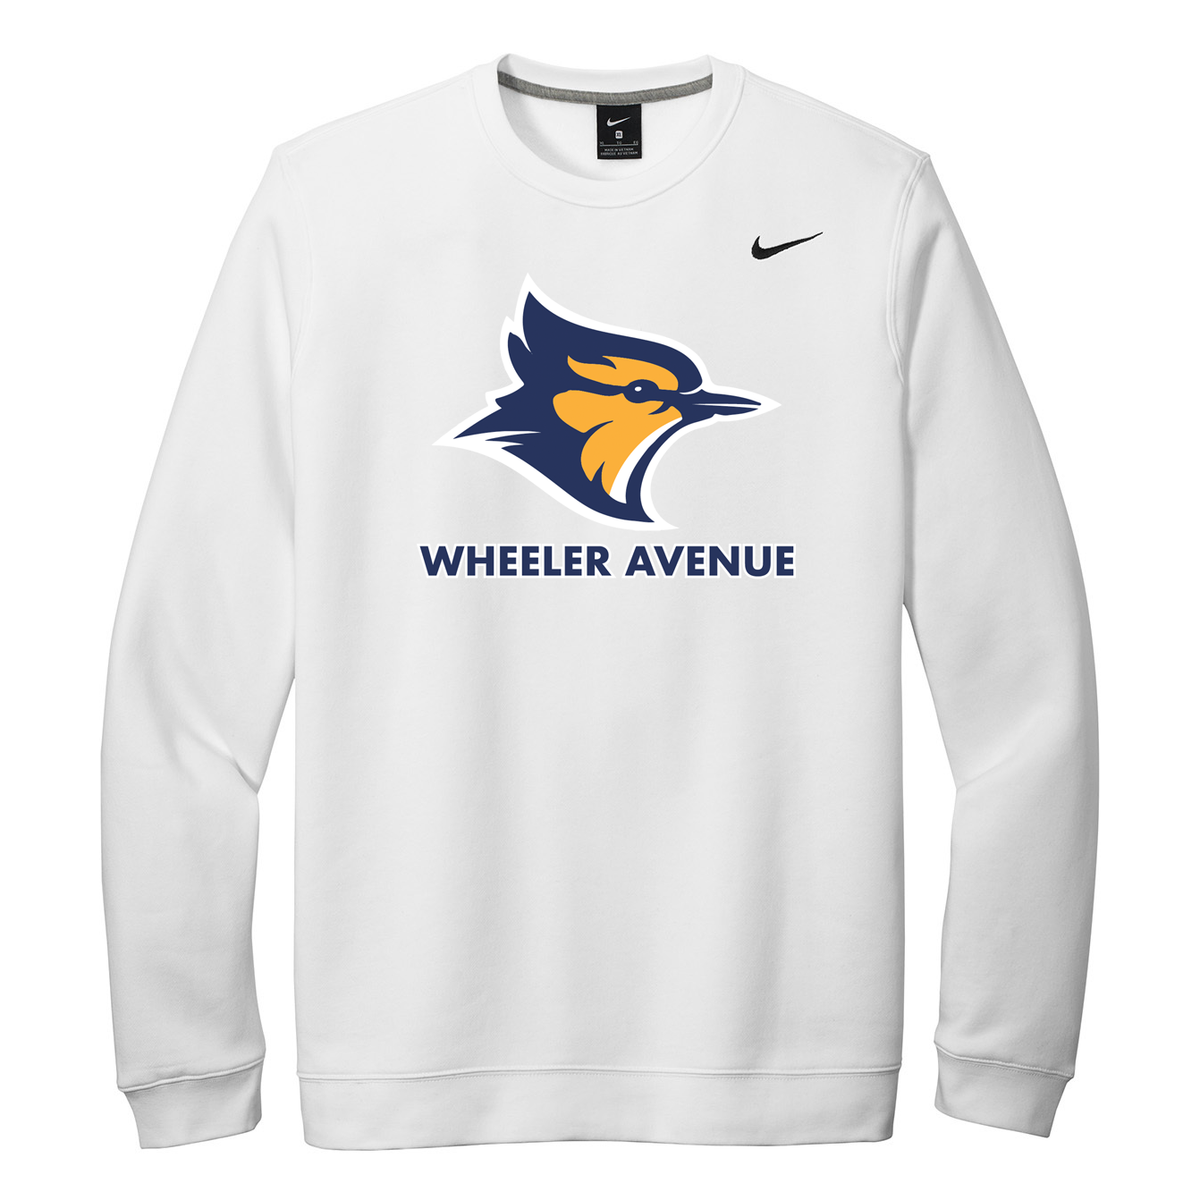 Wheeler Avenue School Nike Fleece Crew Neck